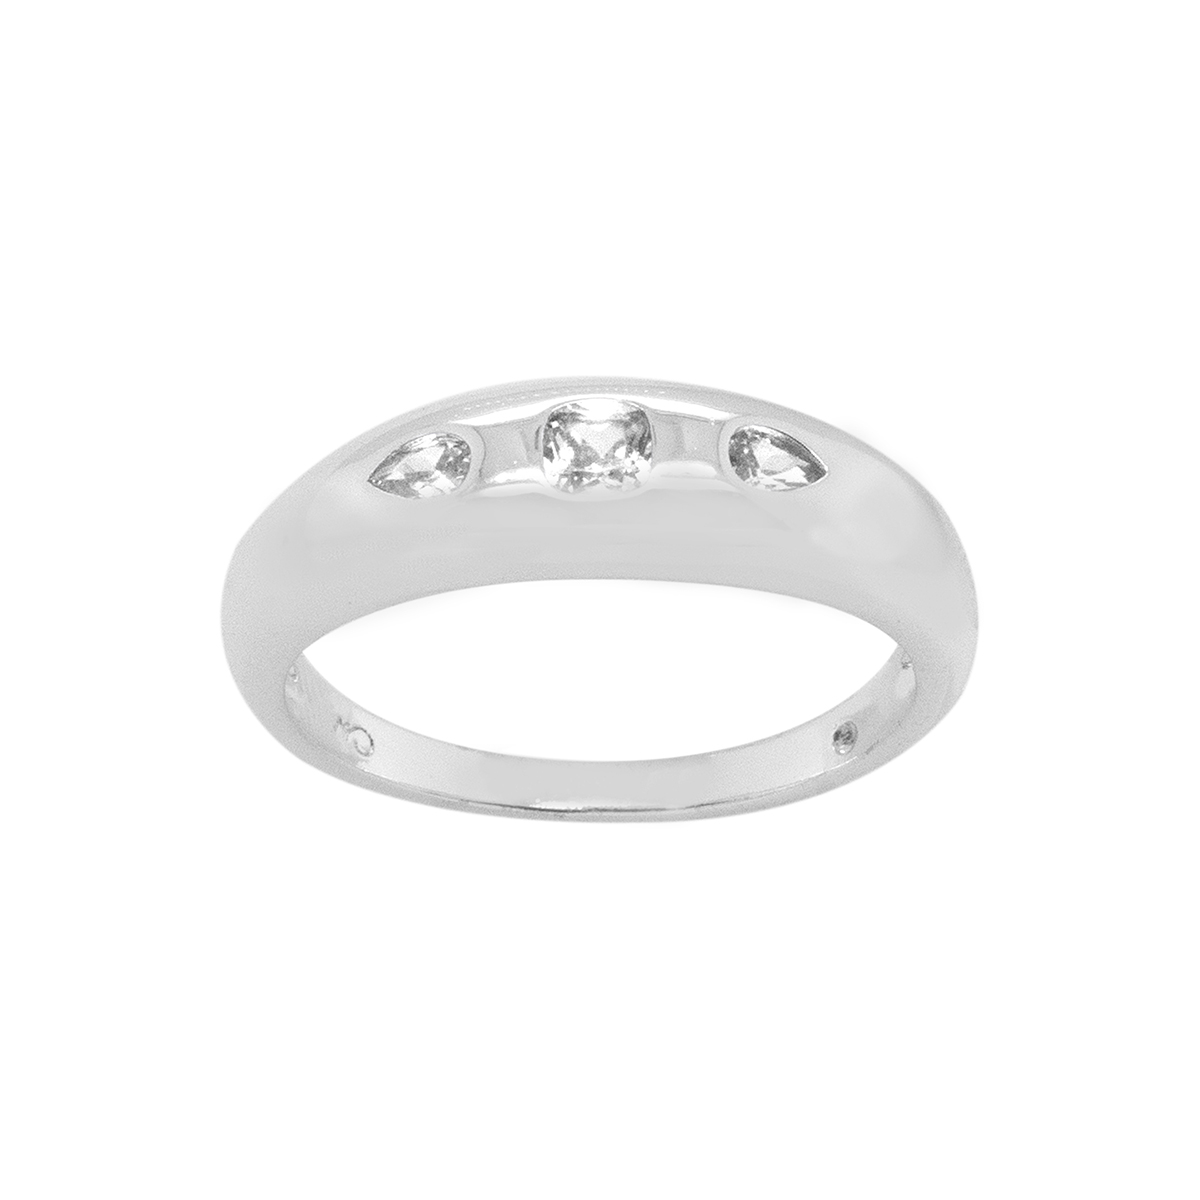 Marsala Clear CZ Puffed Ring